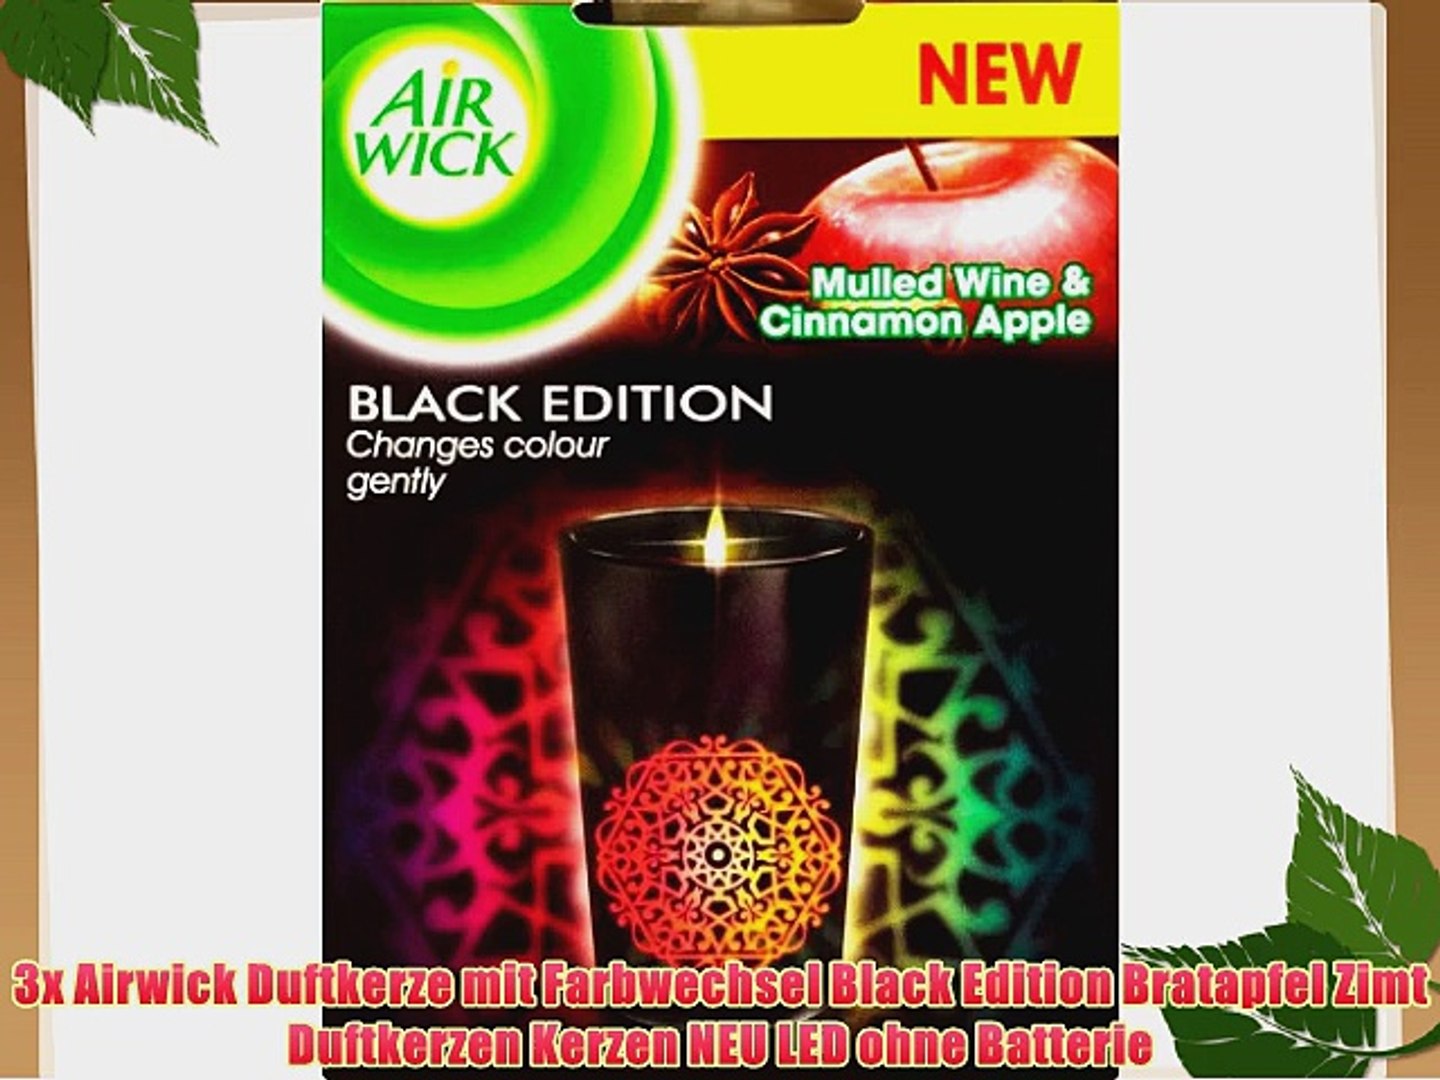 3x Airwick Duftkerze mit Farbwechsel Black Edition Bratapfel Zimt  Duftkerzen Kerzen NEU LED - video Dailymotion